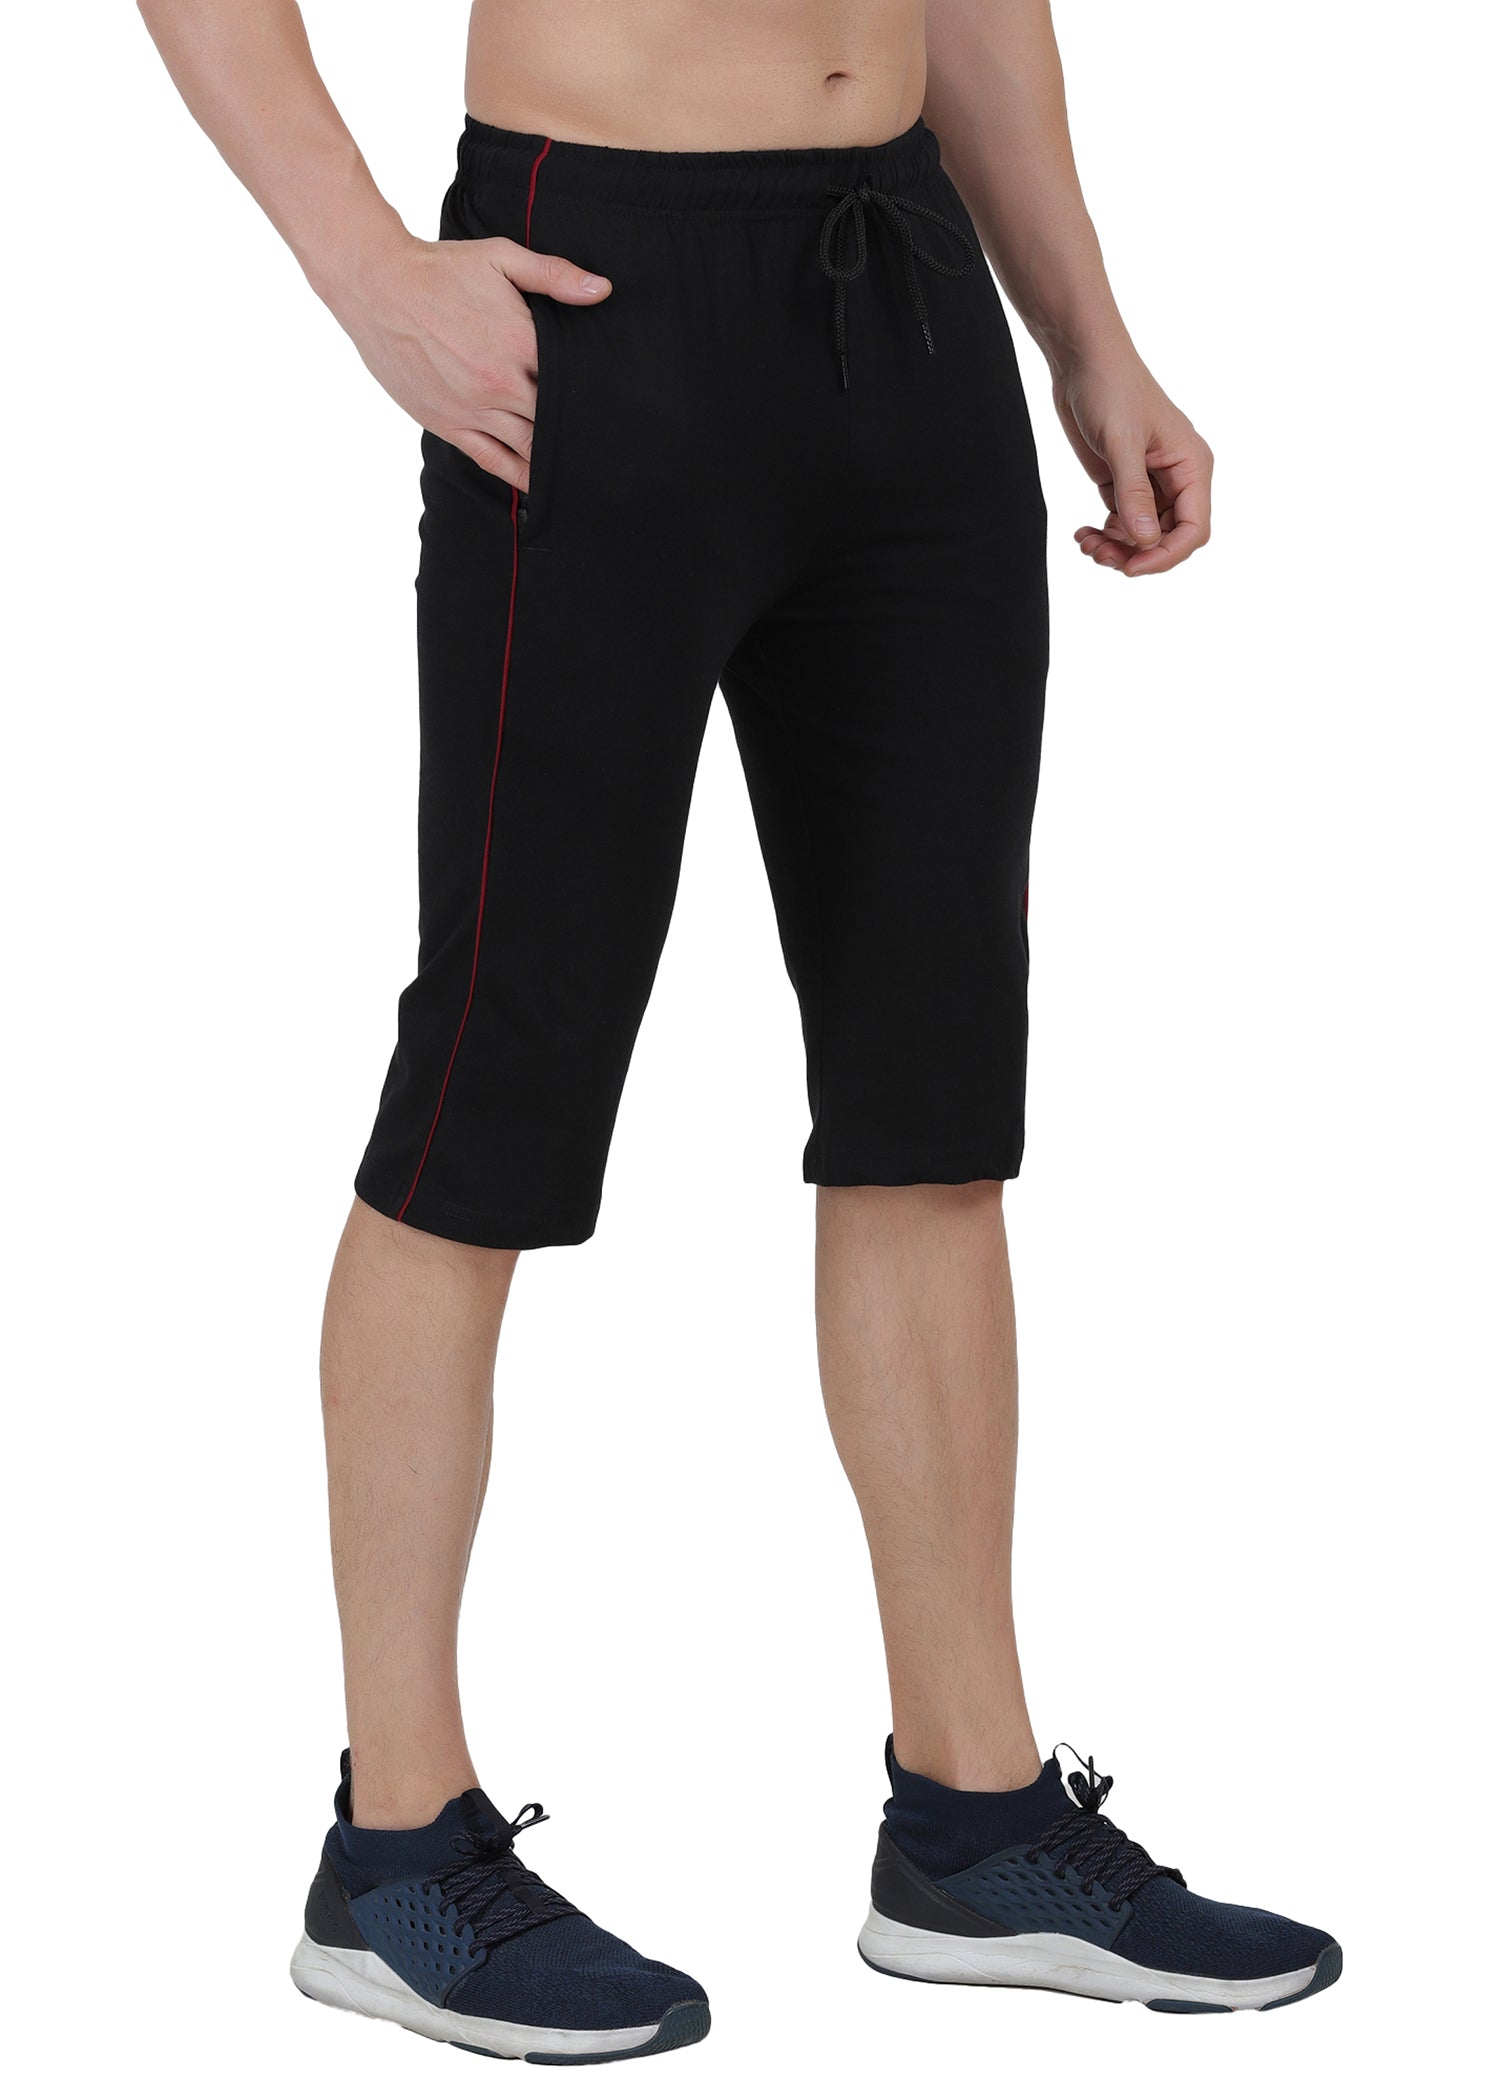 Buy Jockey Black Capri Pants  Style Number 1300 Online at Low Prices in  India  Paytmmallcom